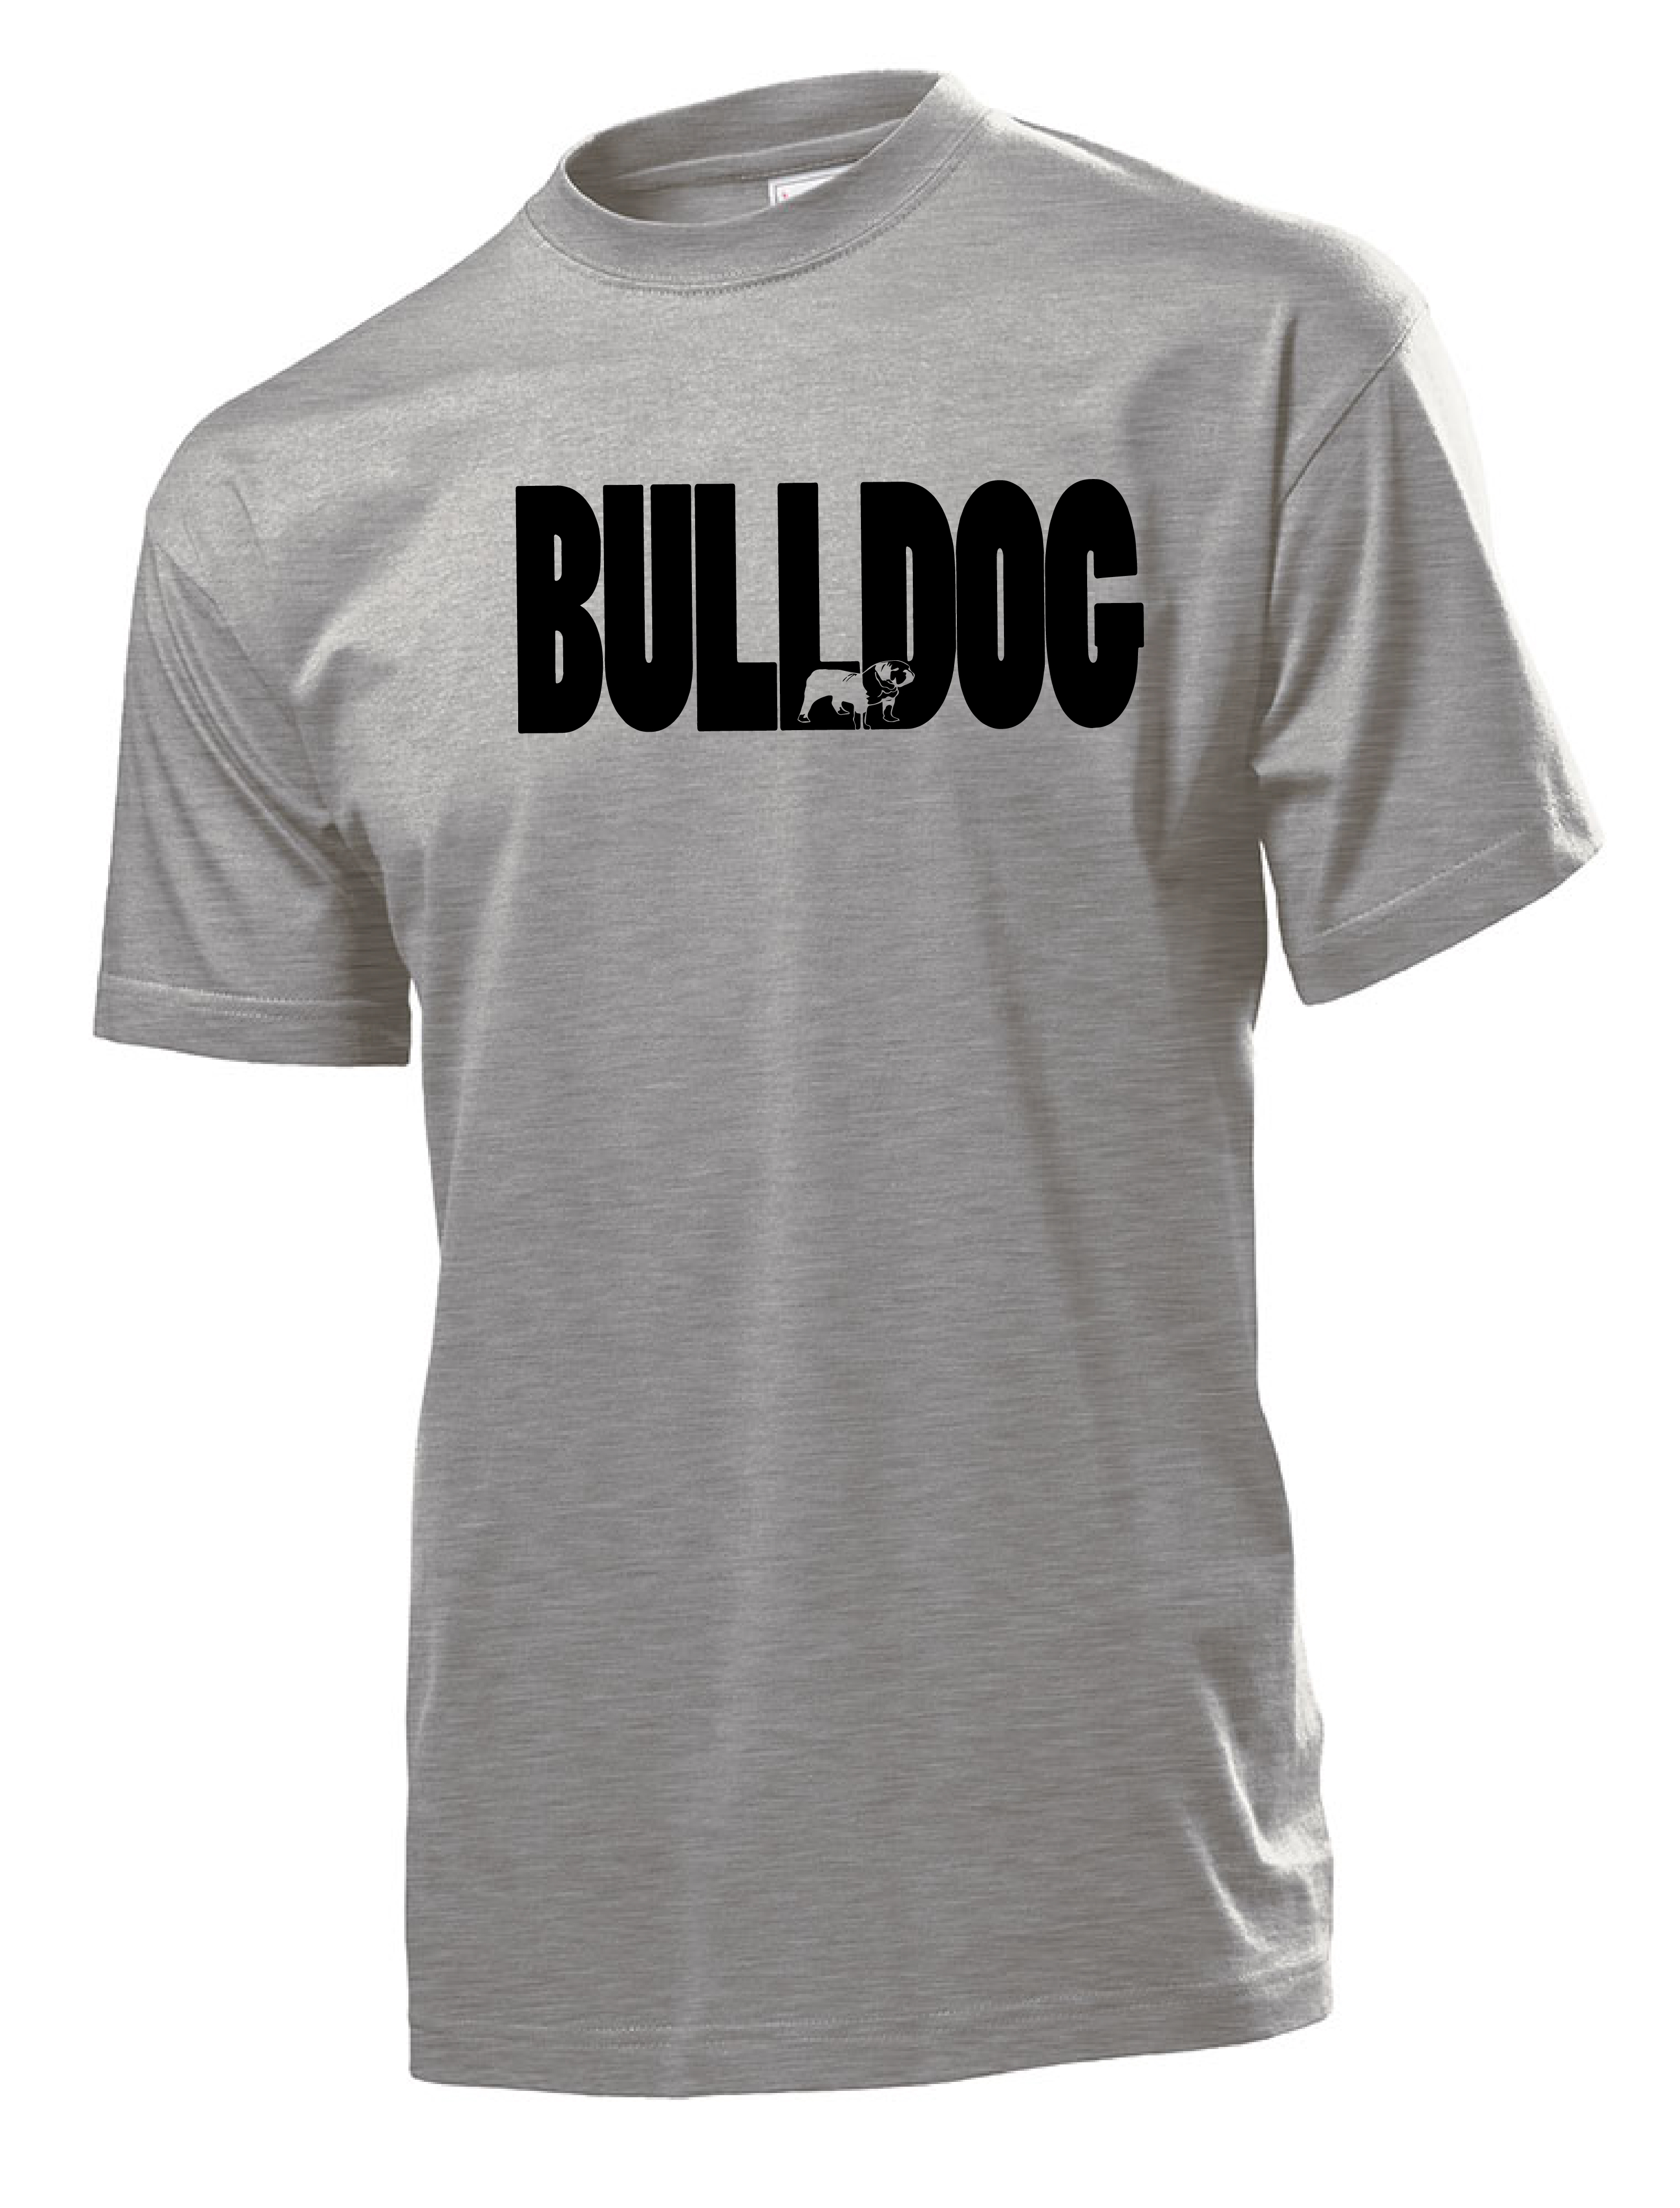 Tričko s potiskem Bulldog nápis